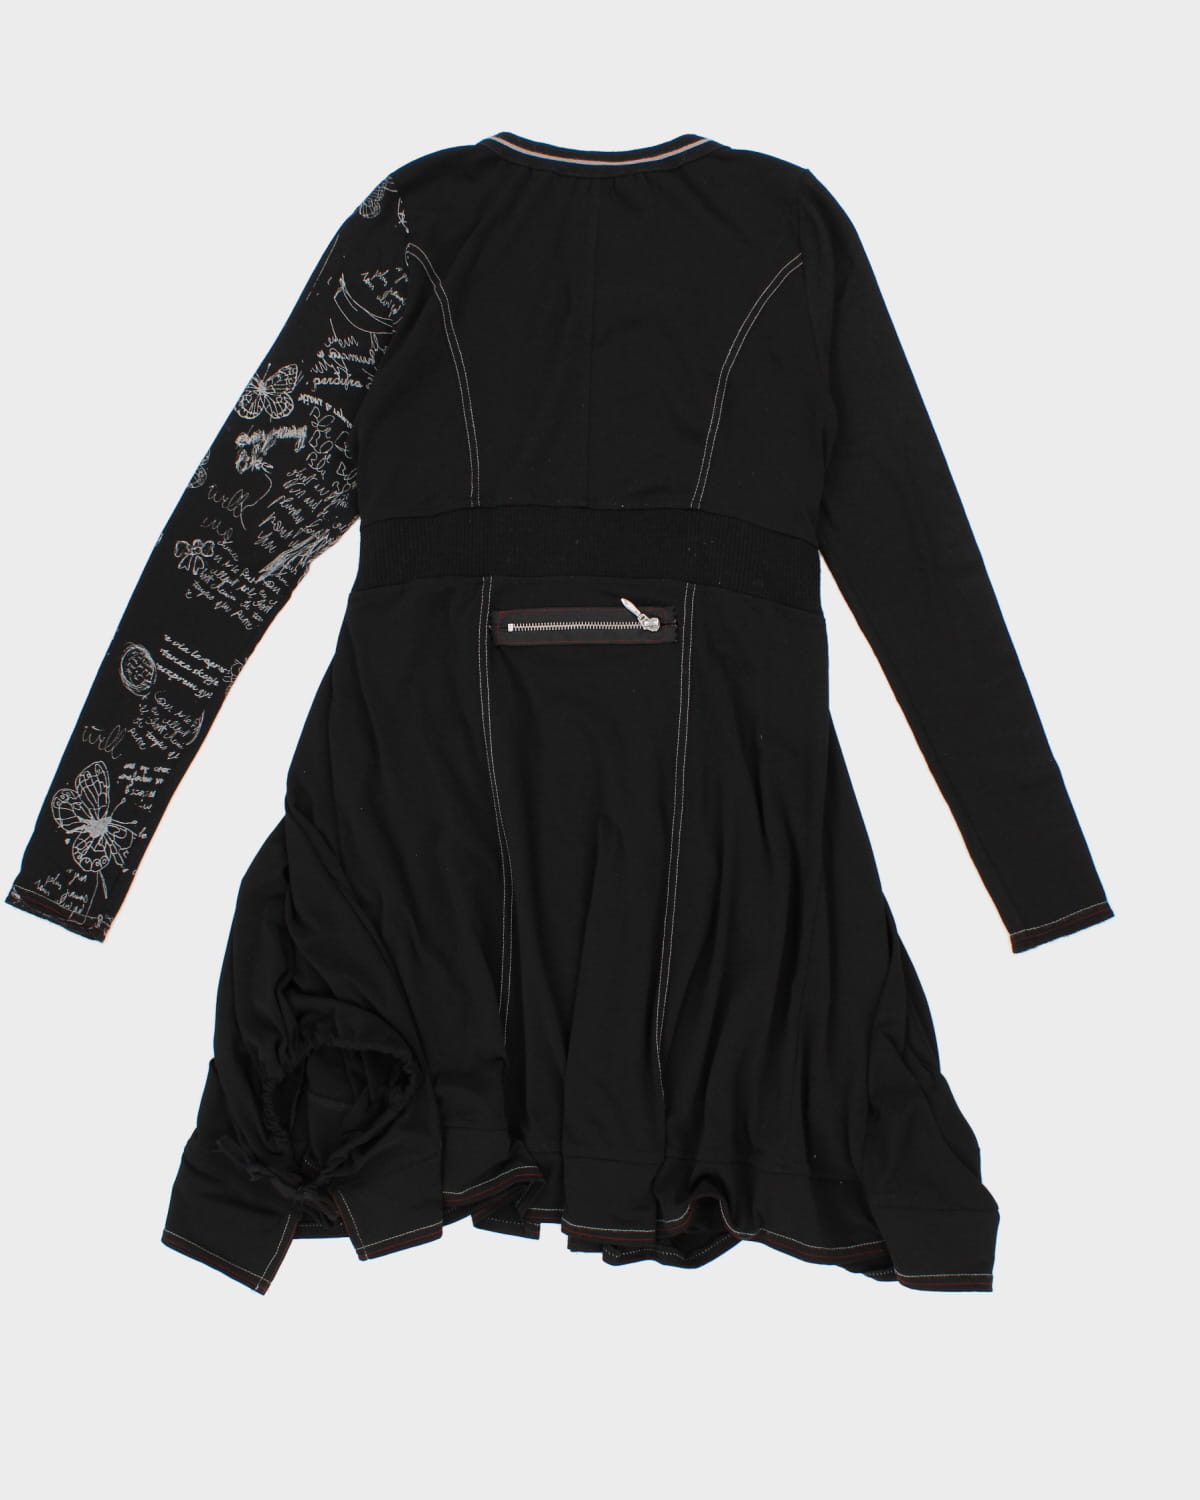 Vitrin Design Long Sleeve Zip Up Dress - S